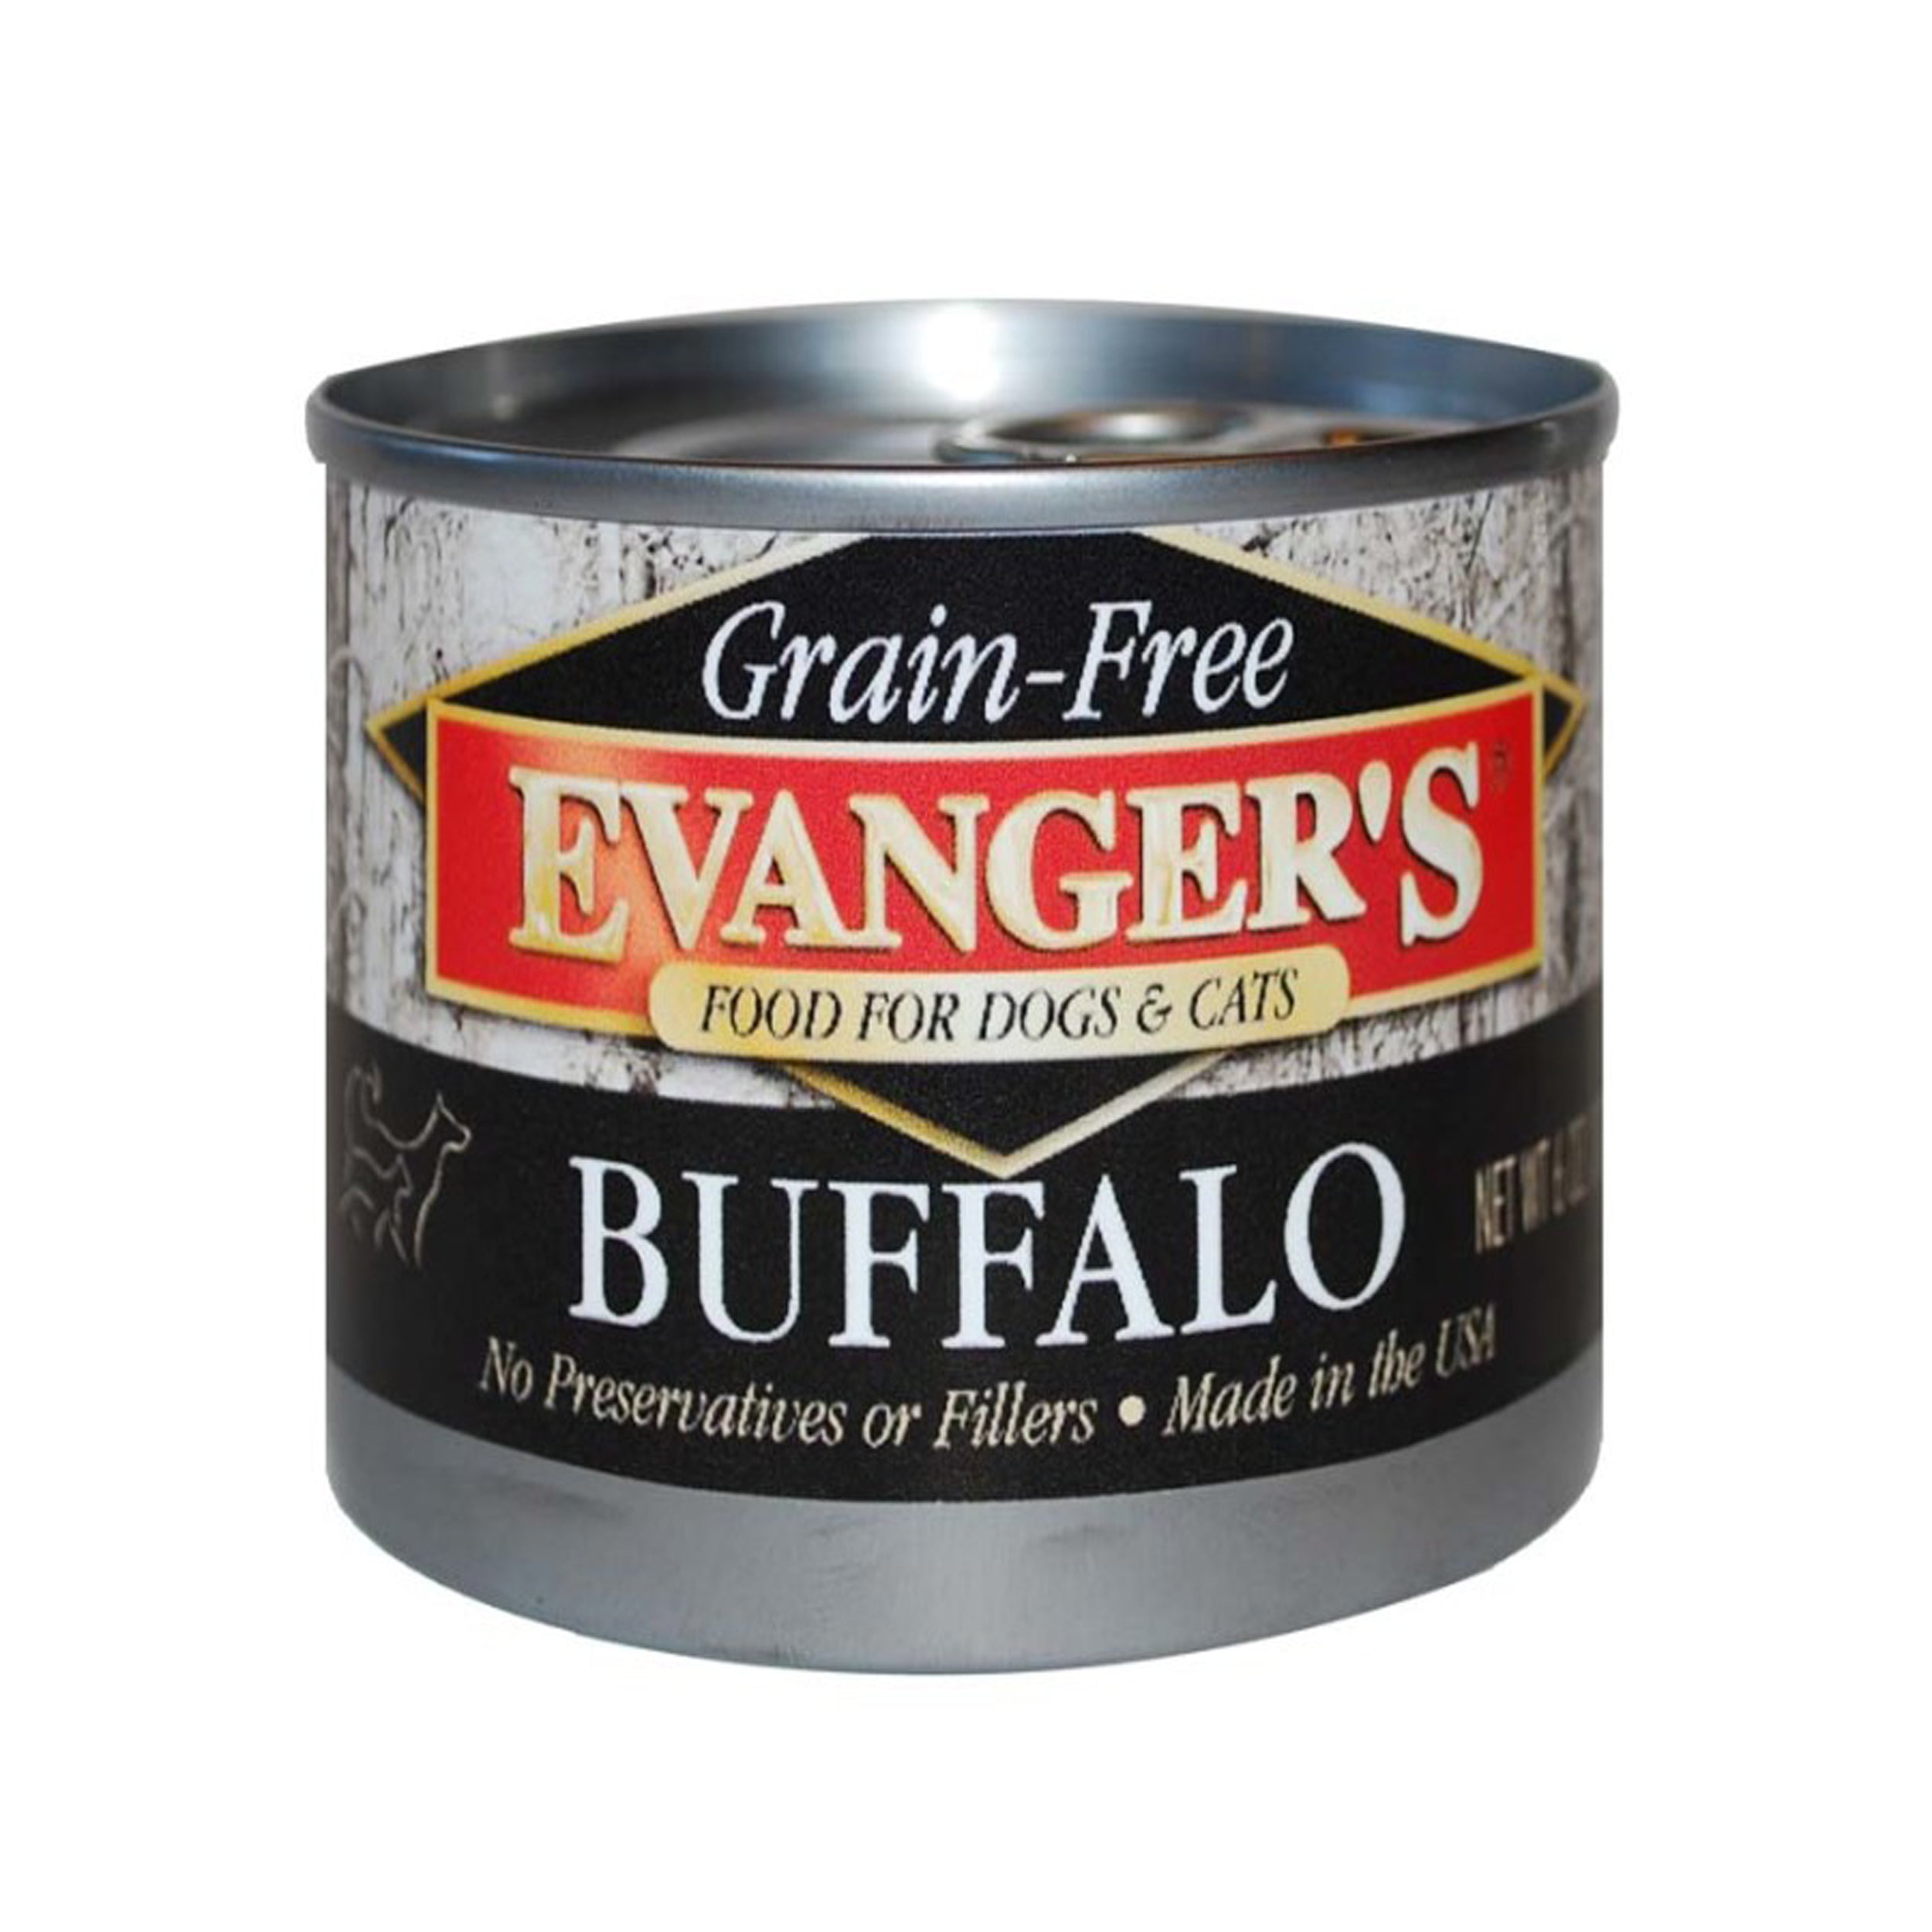 Evanger's Grain-Free Wet Dog & Cat Food Buffalo 24ea/6 oz, 24 pk